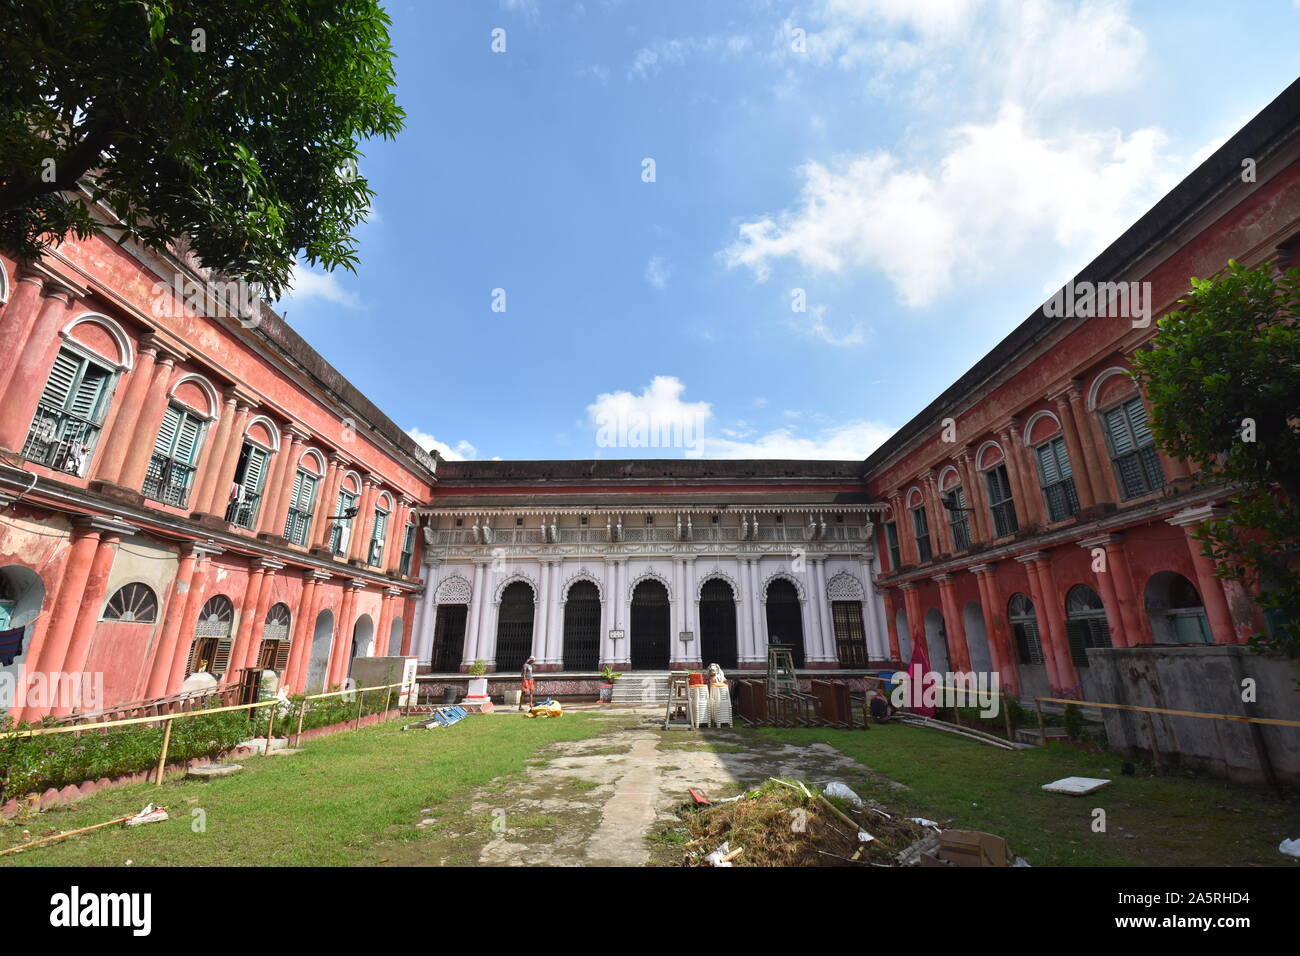 Cour intérieure de l'Shobhabazar Palais Royal (Gopinath Bari). 36 Nabakrishna Raja Street. Kolkata, Bengale occidental, Inde. Banque D'Images